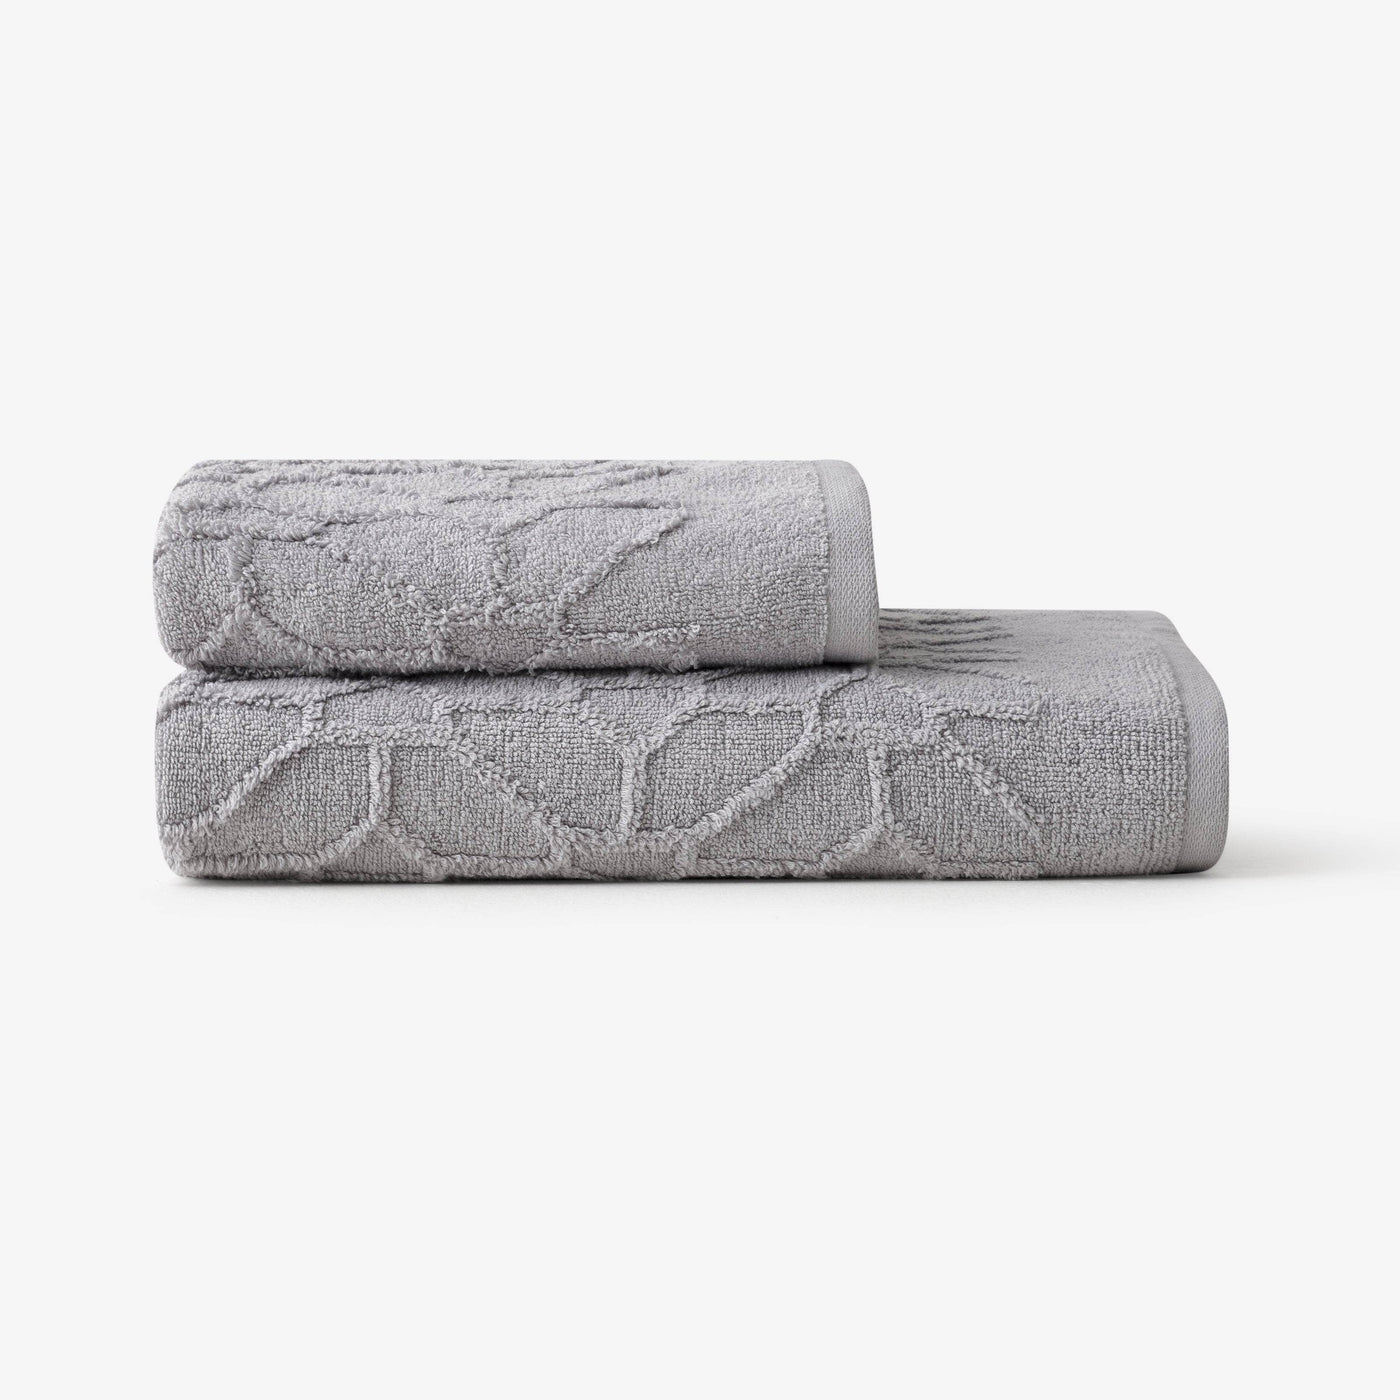 Harry Jacquard 100% Turkish Cotton Bath Towel, Grey Bath Towels sazy.com